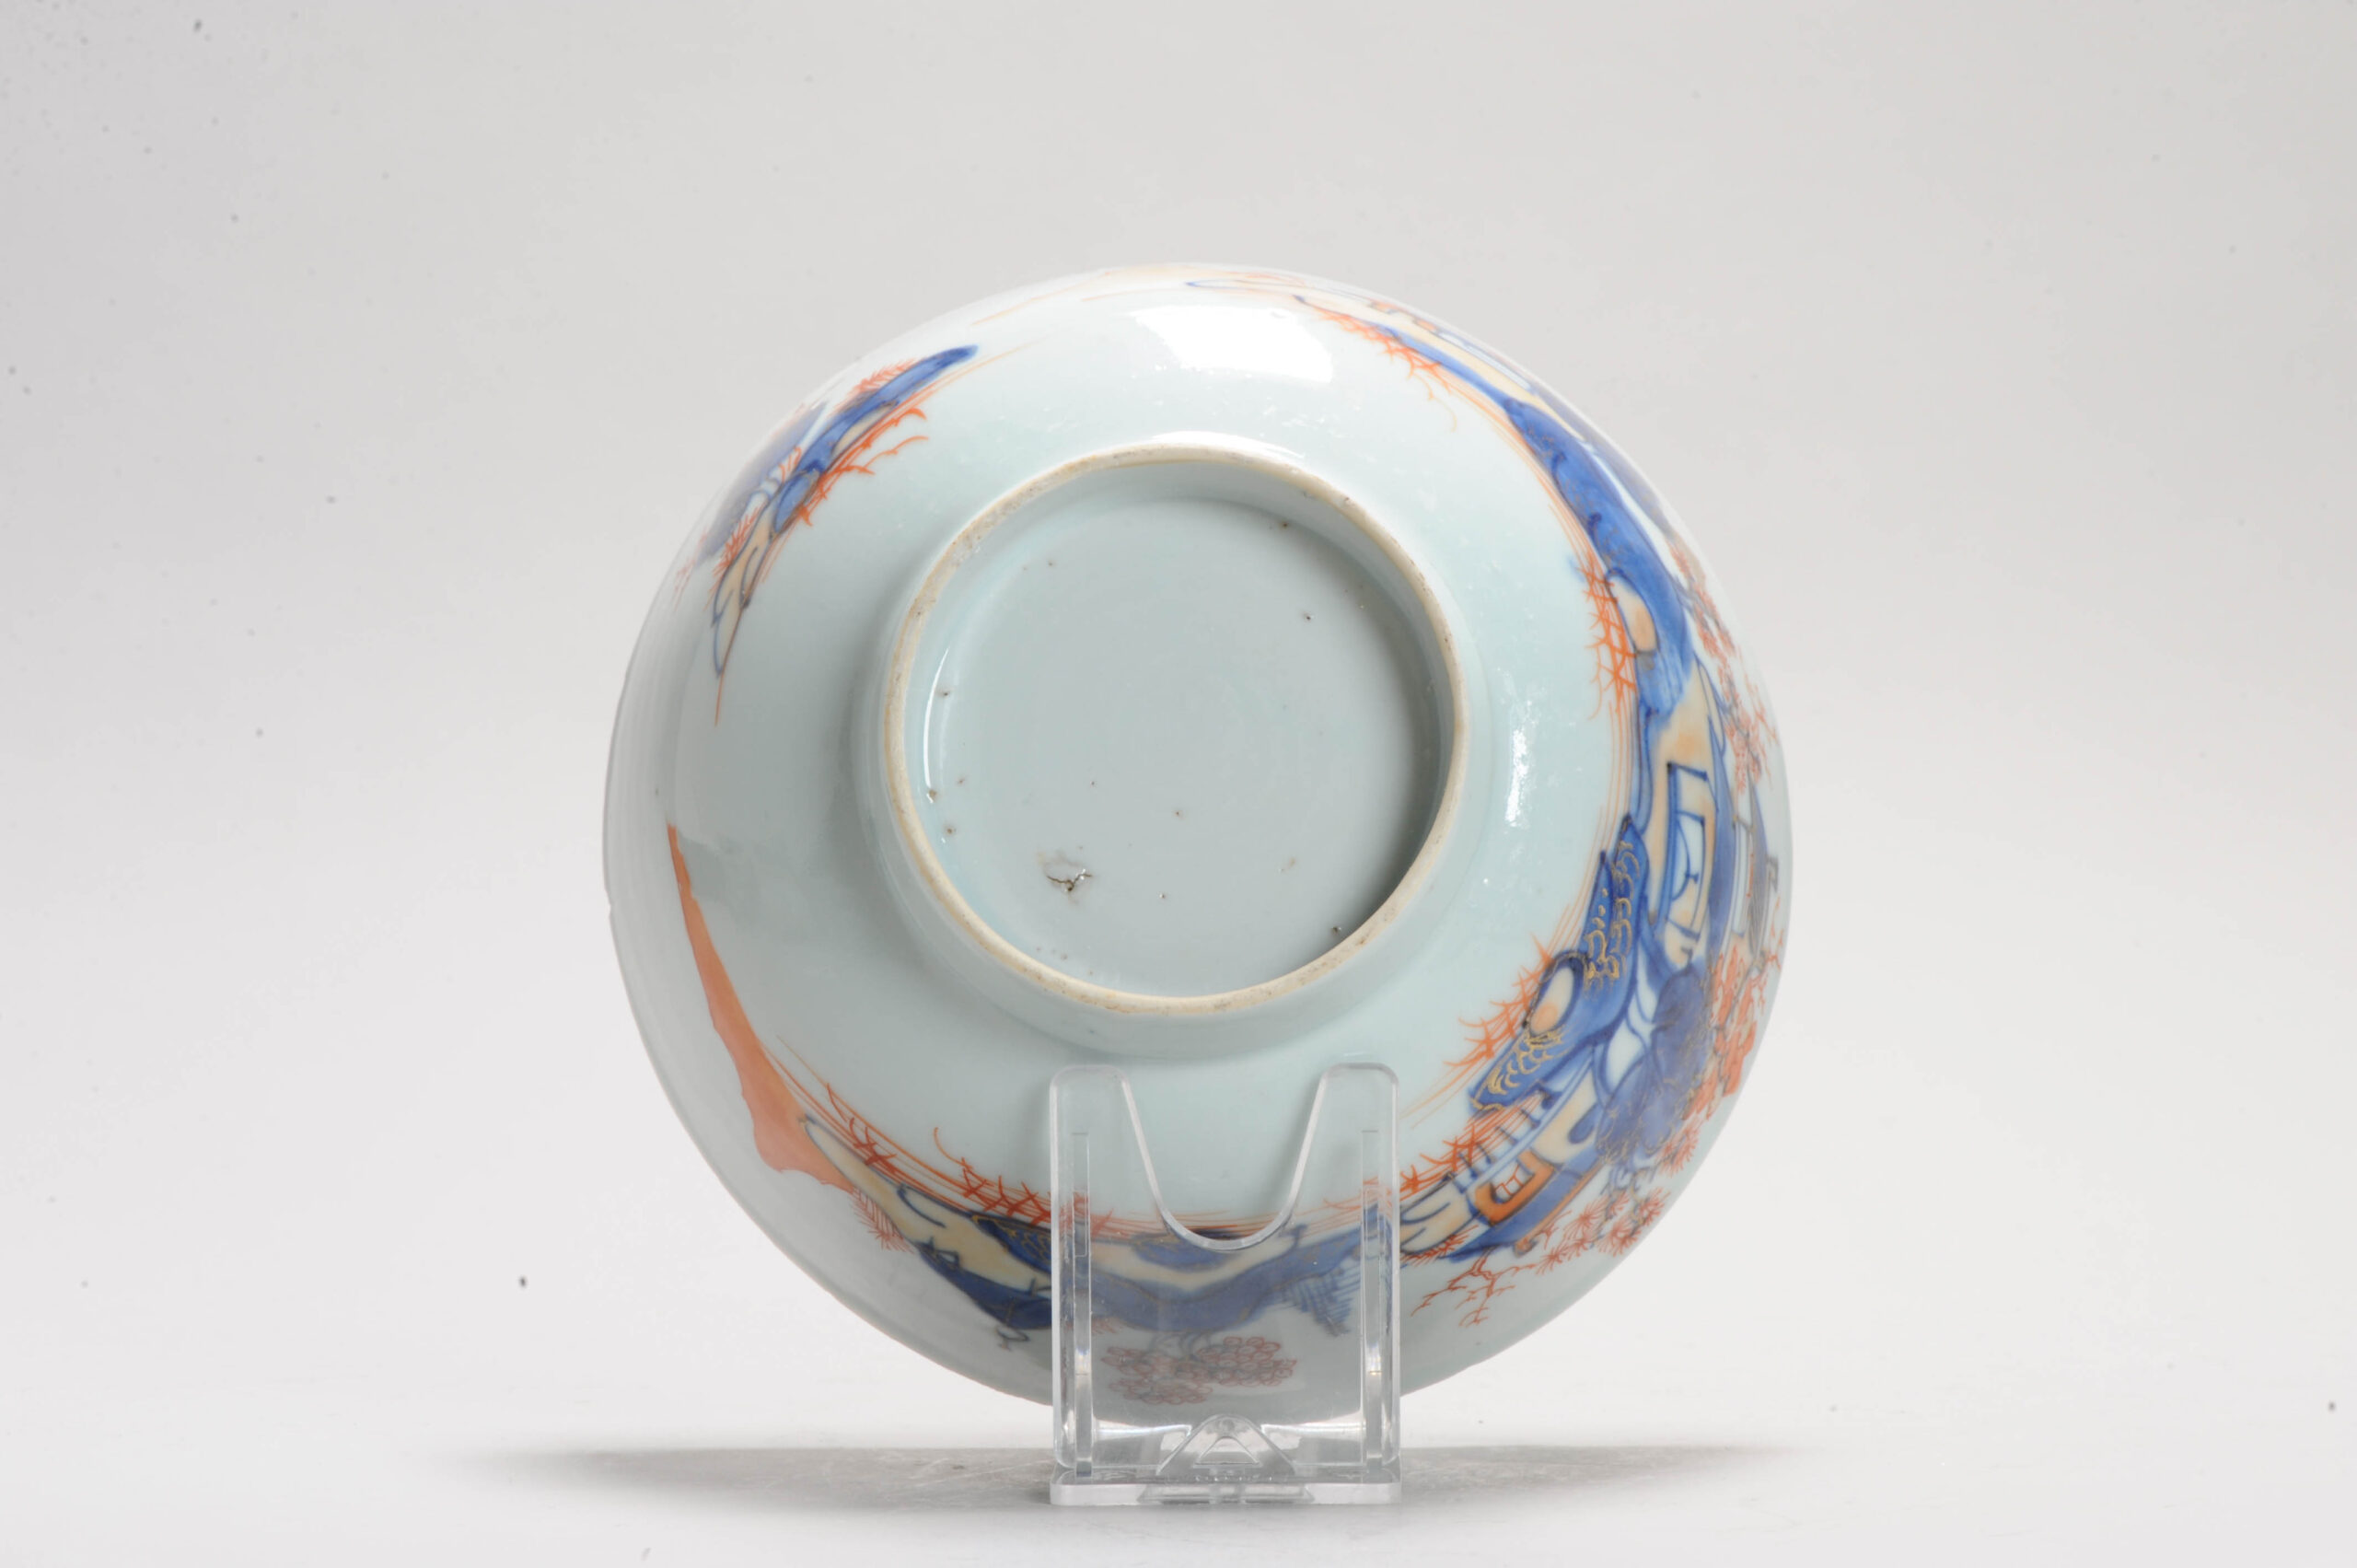 A Chinese Porcelain Imari Bowl 1720-1740 Period Landscape Pagode scene